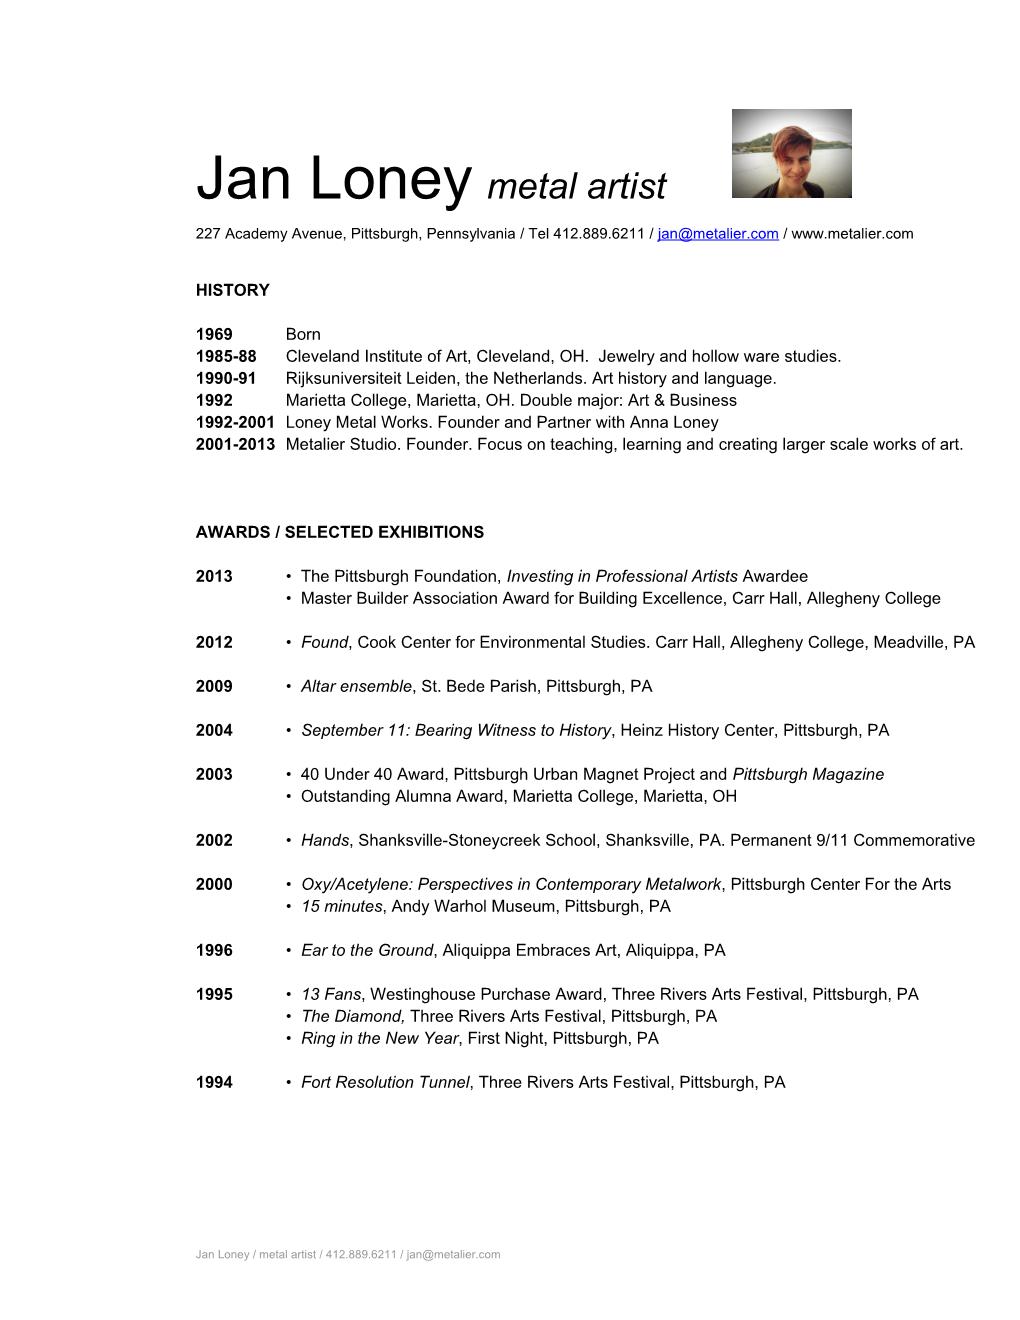 Jan Loney Metal Artist